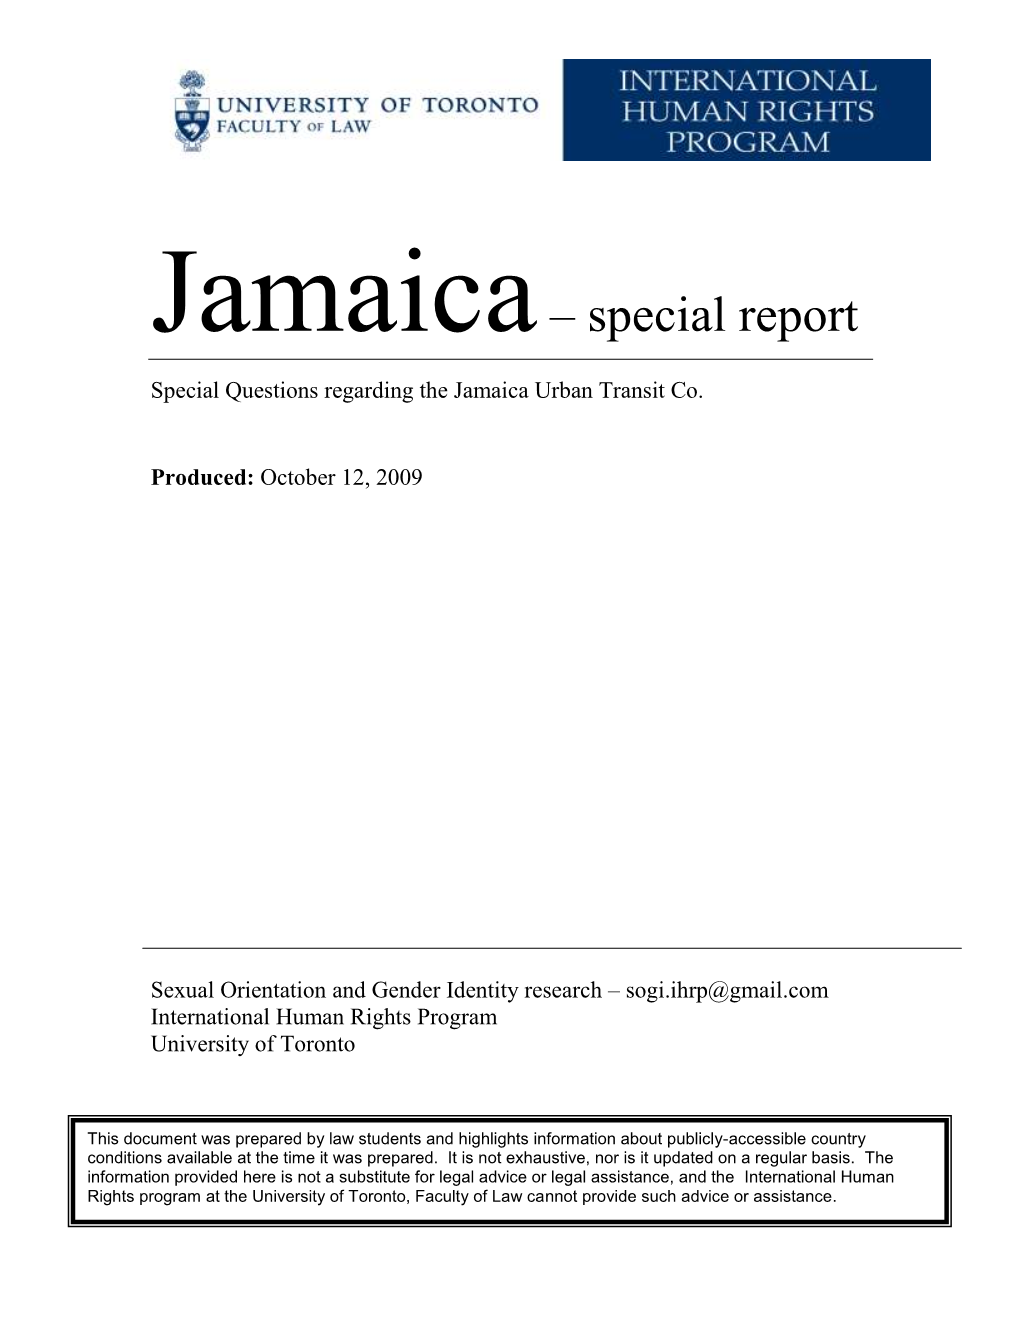 Jamaica – Special Report Special Questions Regarding the Jamaica Urban Transit Co